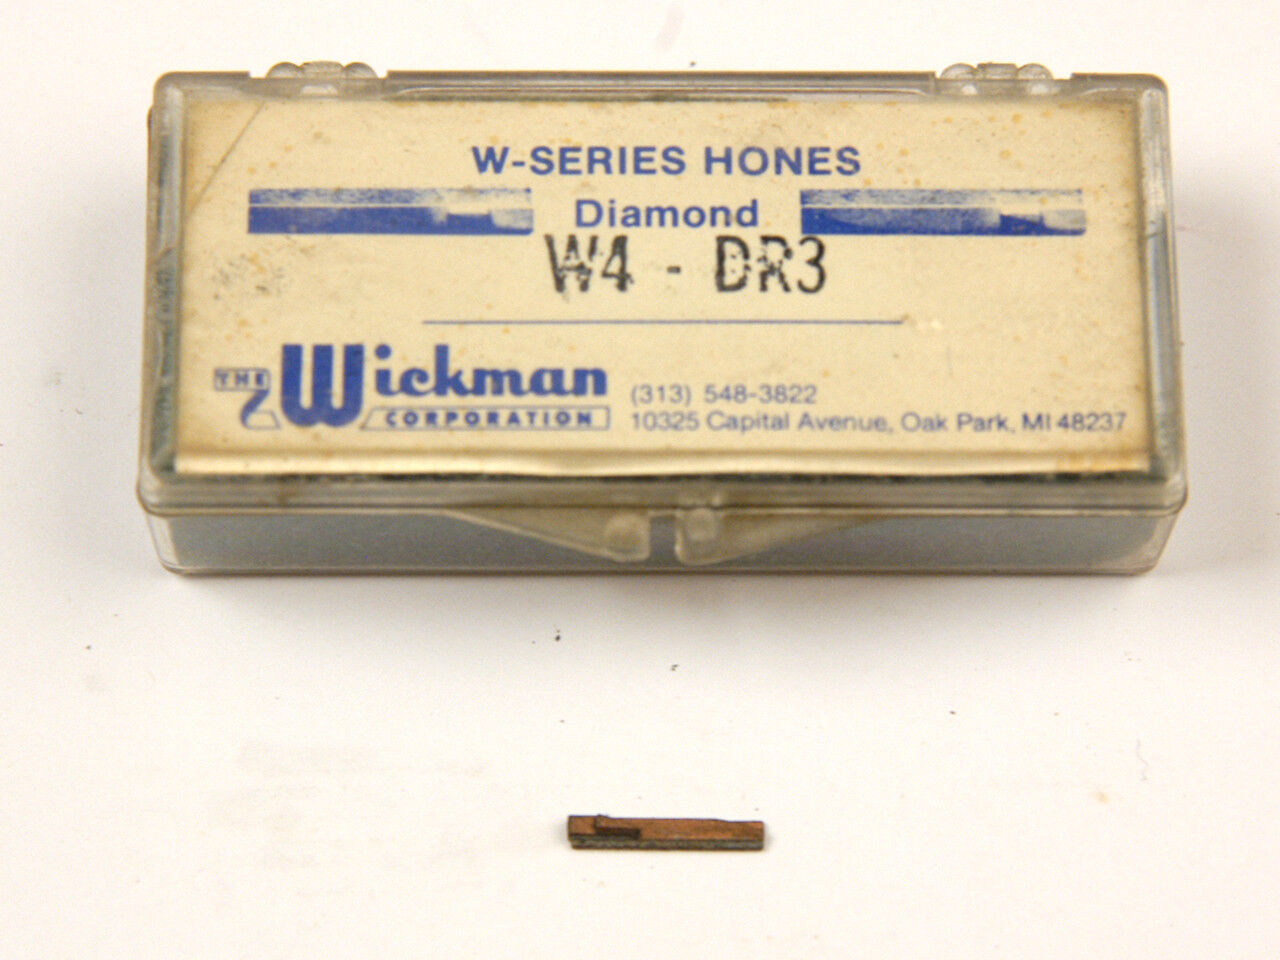 W4-DR3 WICKMAN DIAMOND HONES  (A-2-5-7-3)